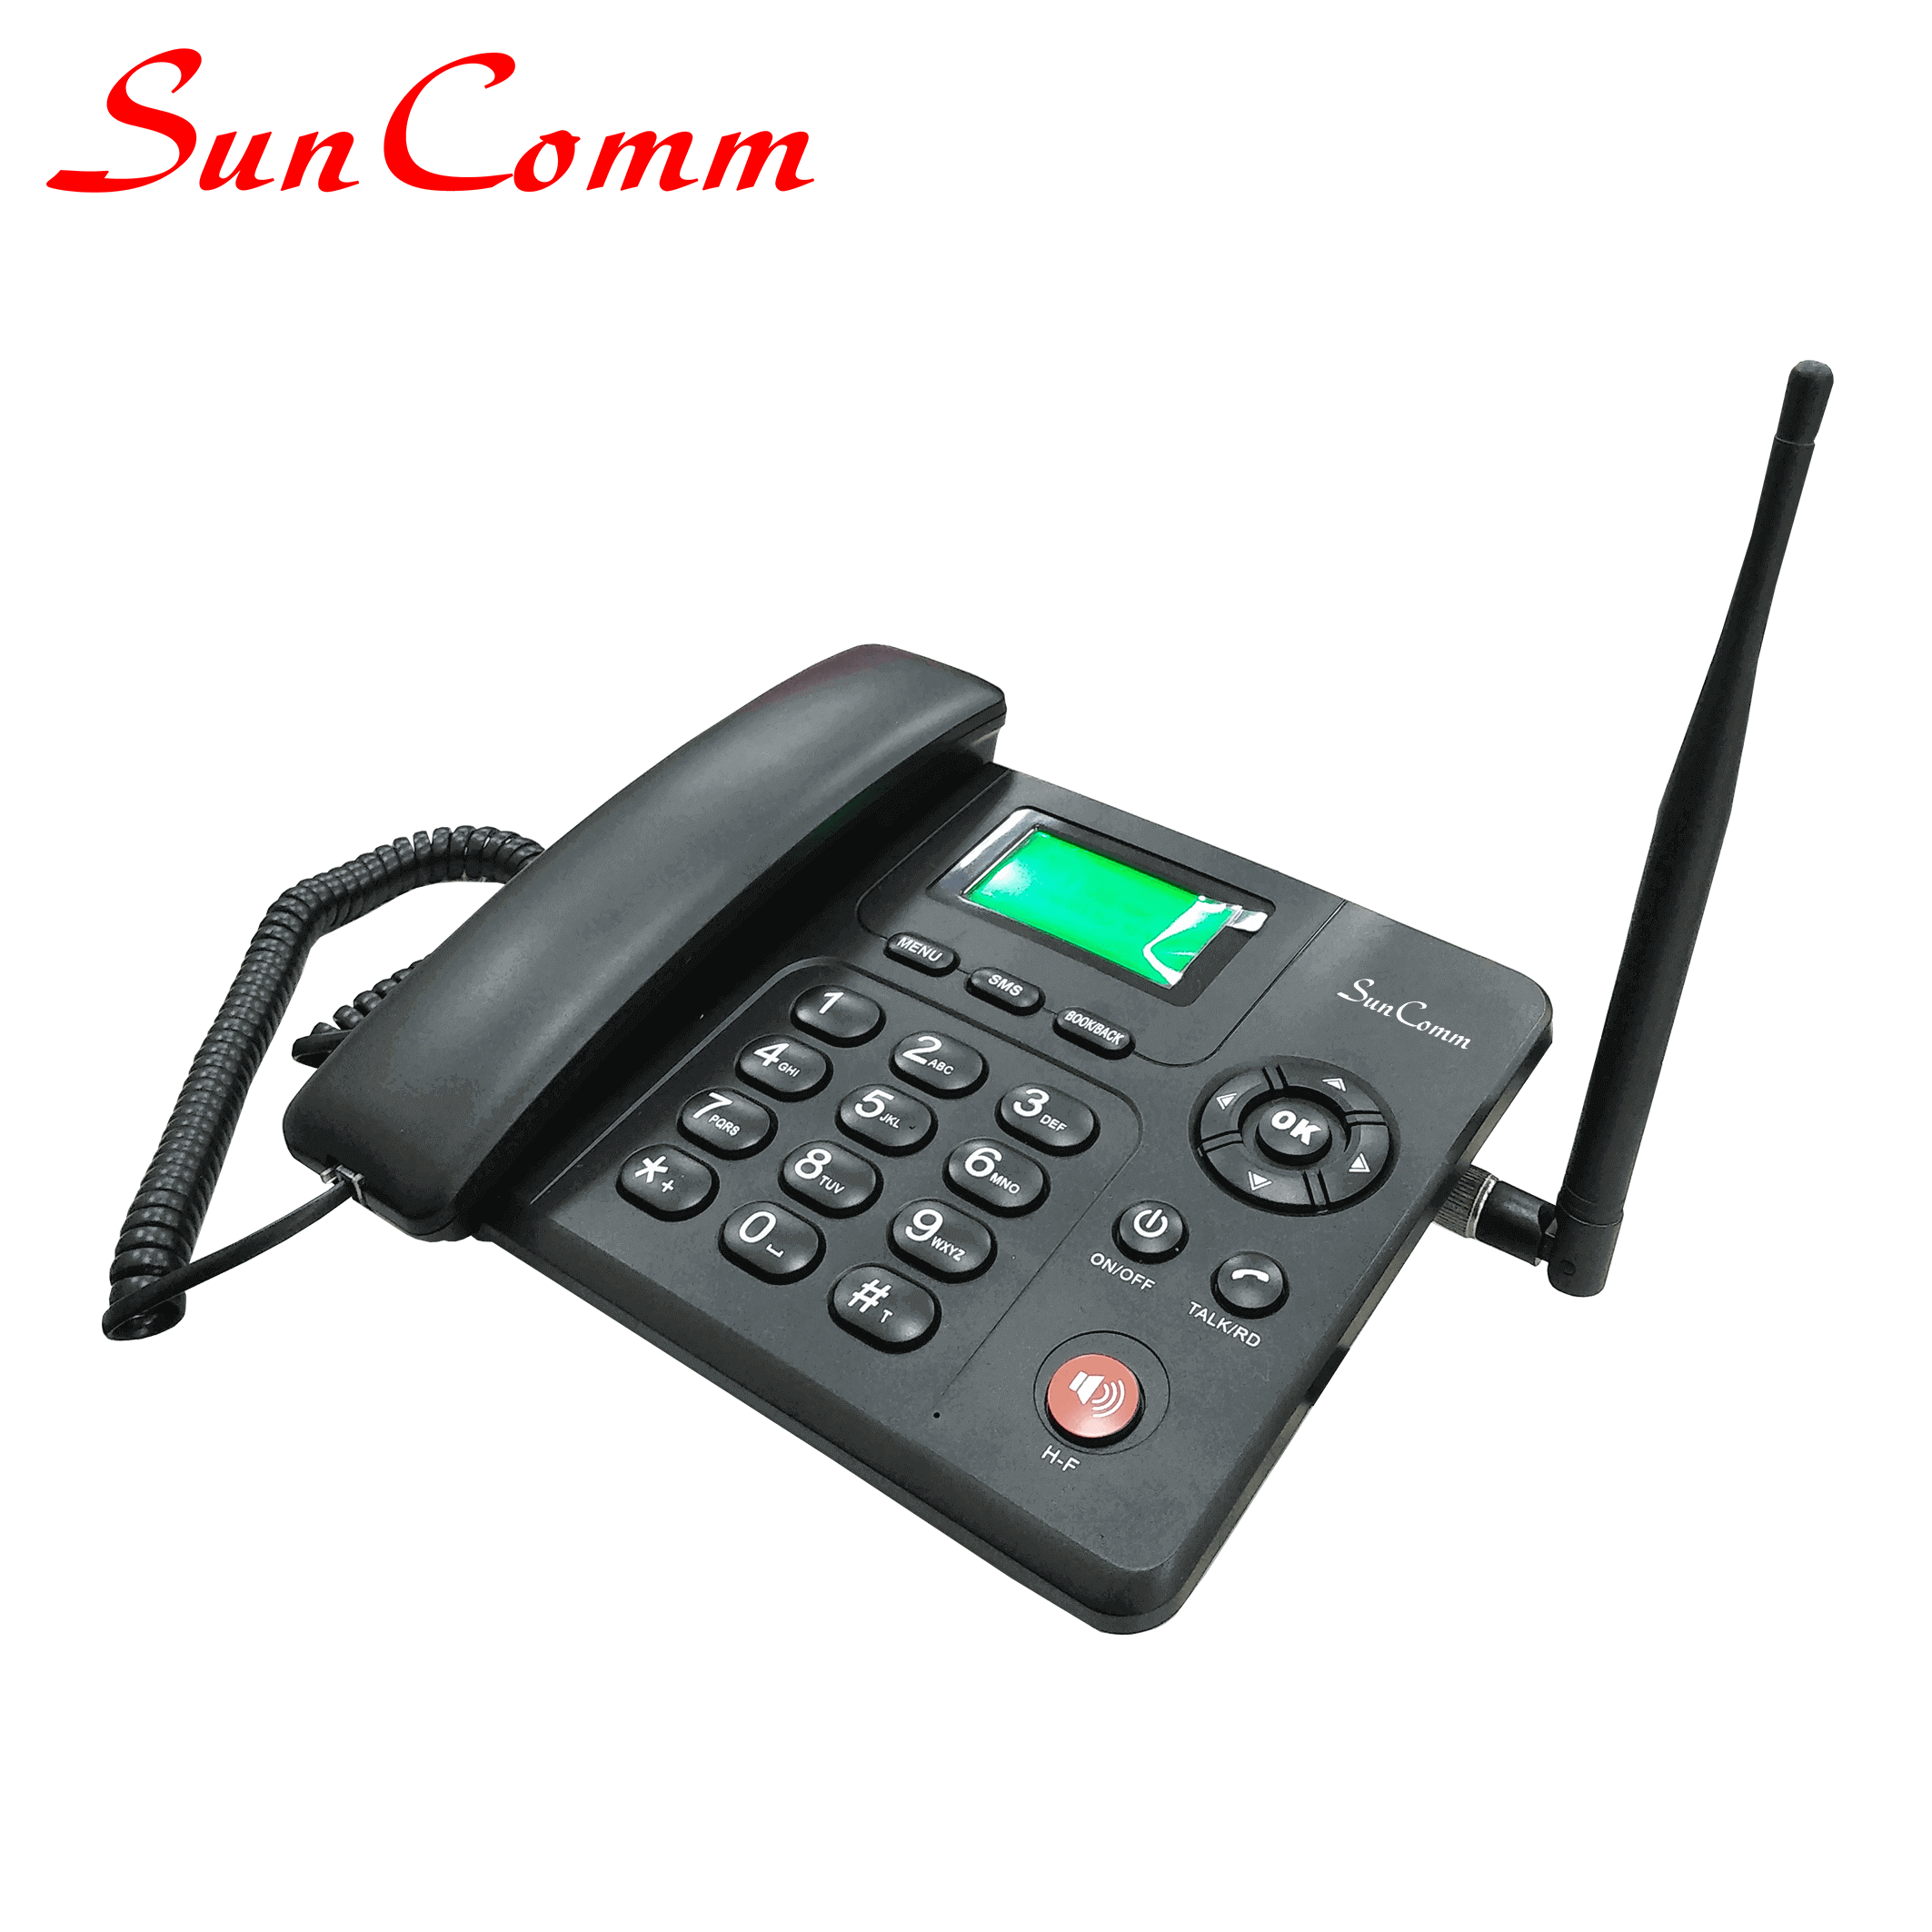 SunComm SC-398-GP3G 3G WCDMA Fixed Wireless Phone (FWP) 3G Desk Phone with Single SIM or Dual SIM, Mono LCD